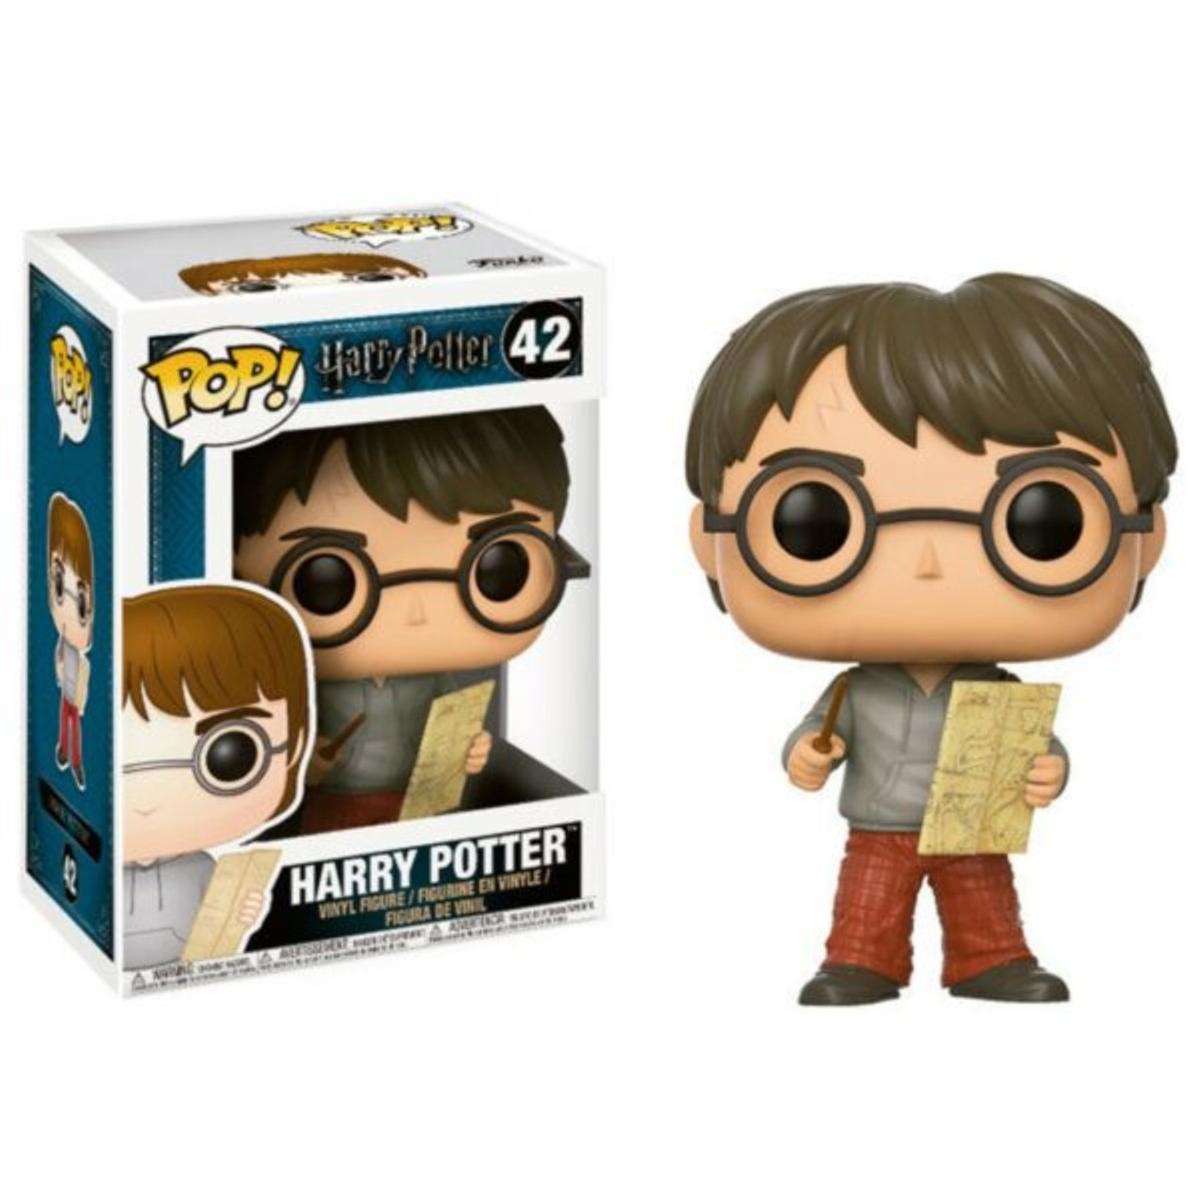 Harry Potter - Figura Funko Pop 42 | Funko | Toys"R"Us España